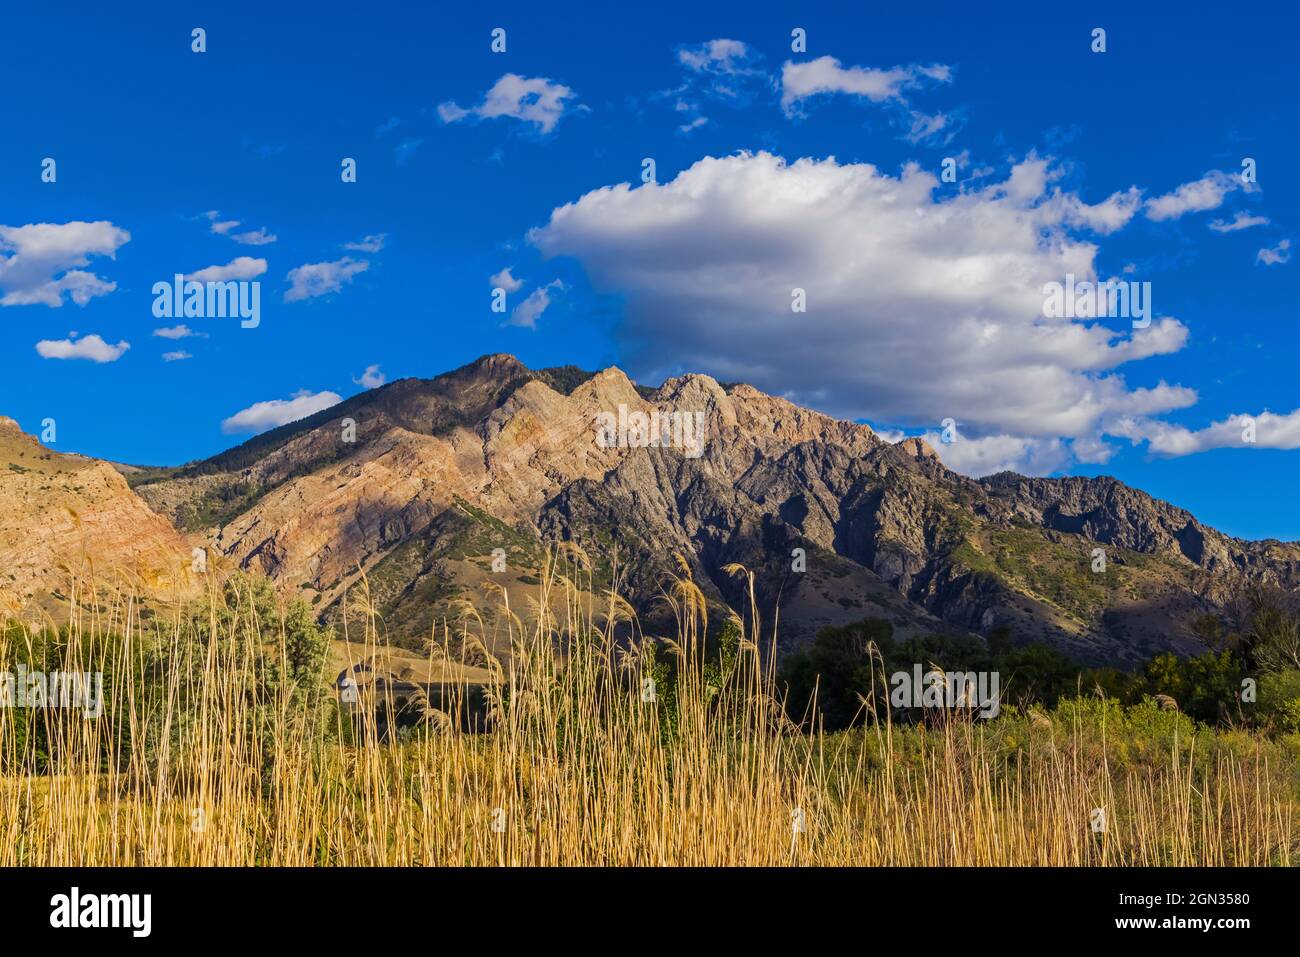 The dappled sunlight falls on Willard Mountain, a rugged mountain in the Wasatch Mountain Range east of Willard, Box Elder County, Utah, USA. Stock Photo